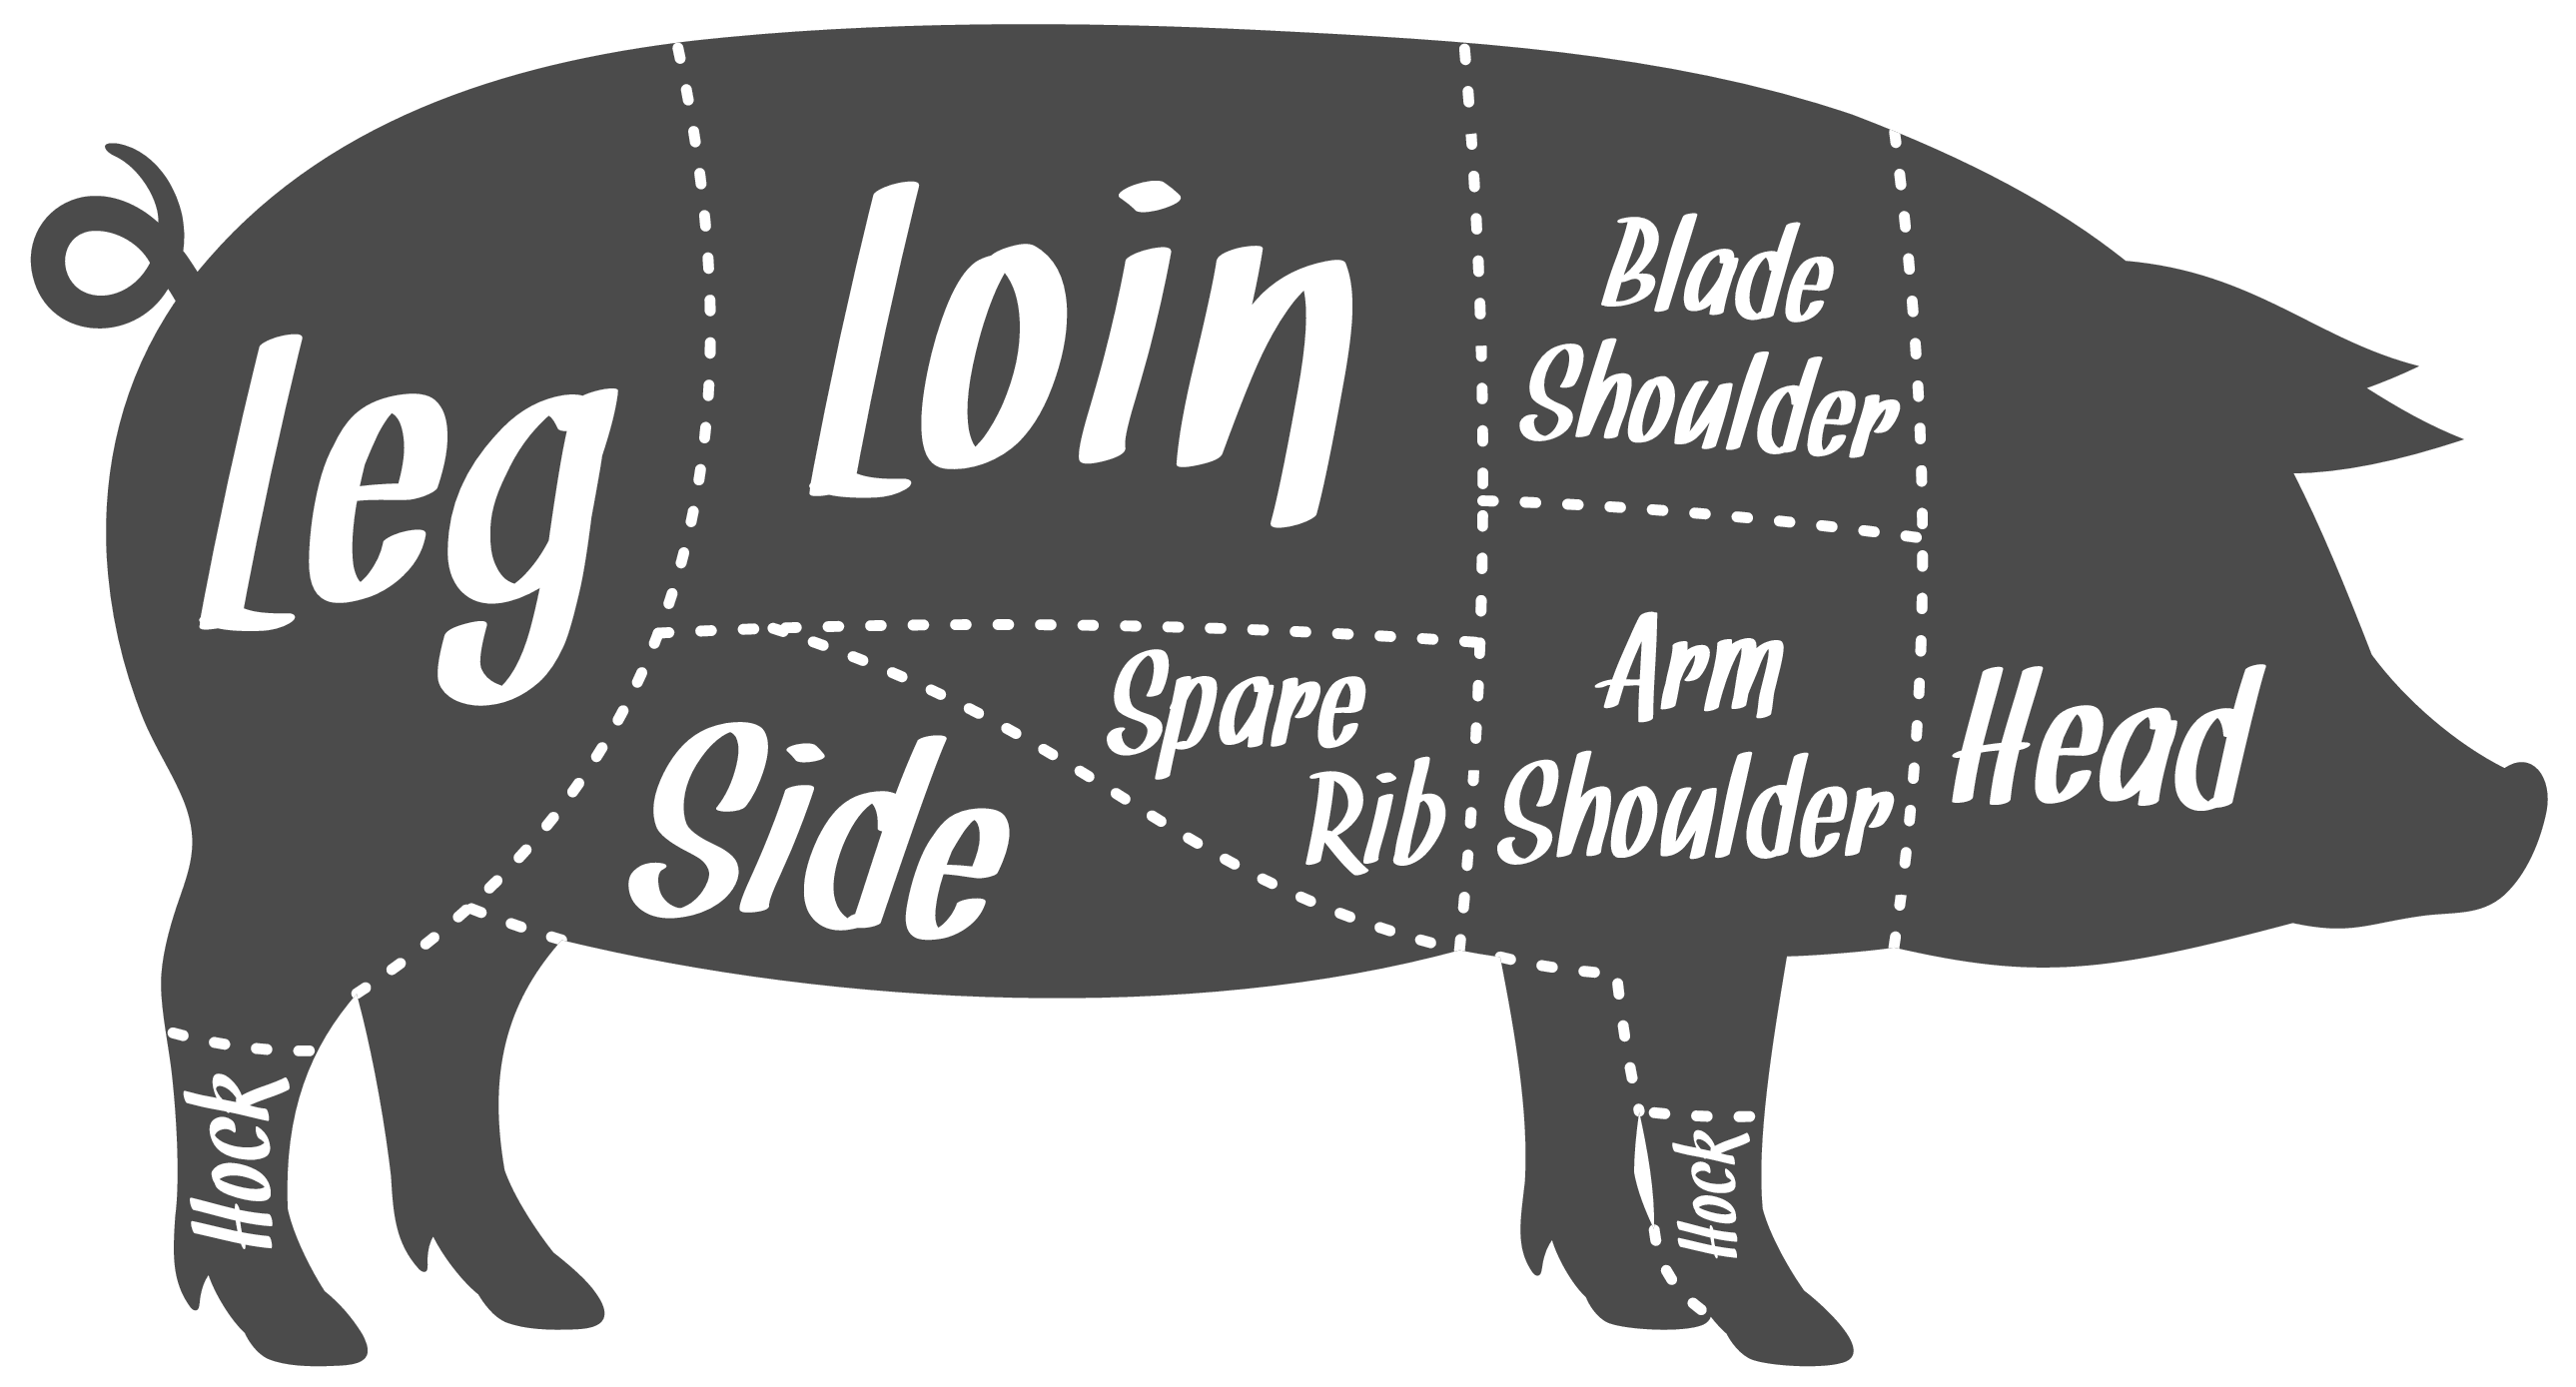 Picture of pork cuts diagram